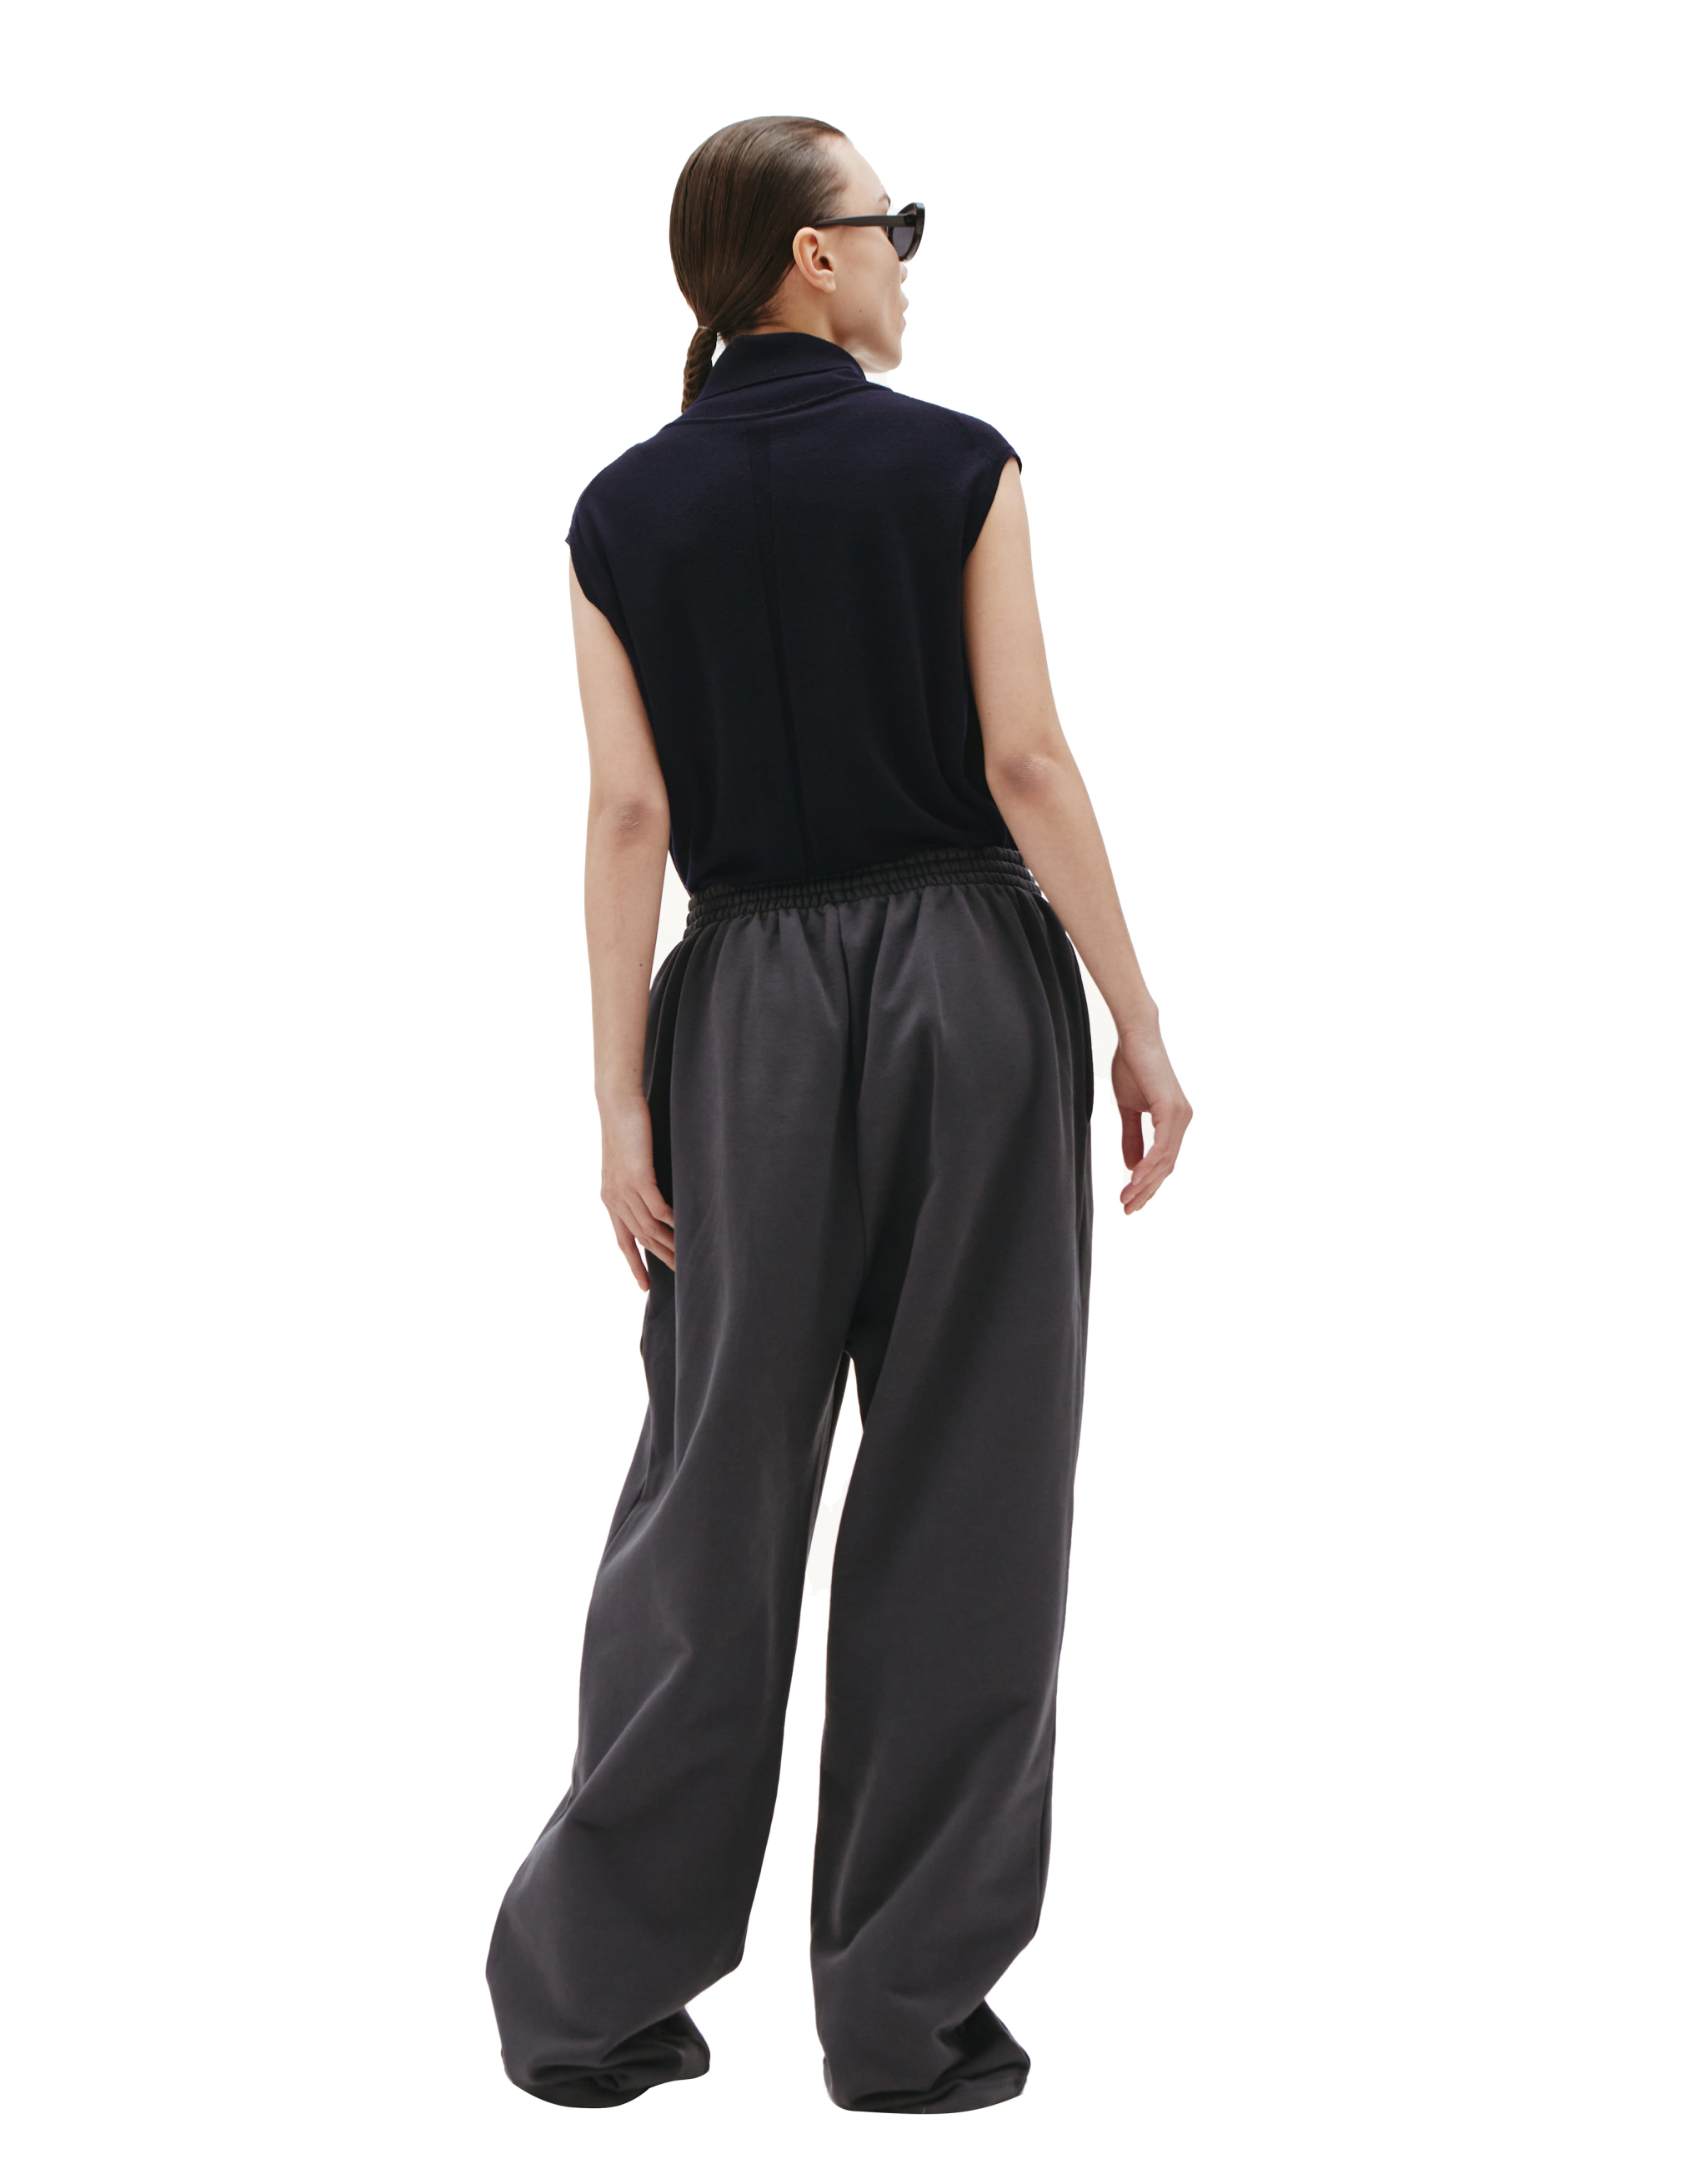 Широкие брюки с вышивкой логотипа Balenciaga 674594/TKVI9/1366, размер XXL;M;S 674594/TKVI9/1366 - фото 4